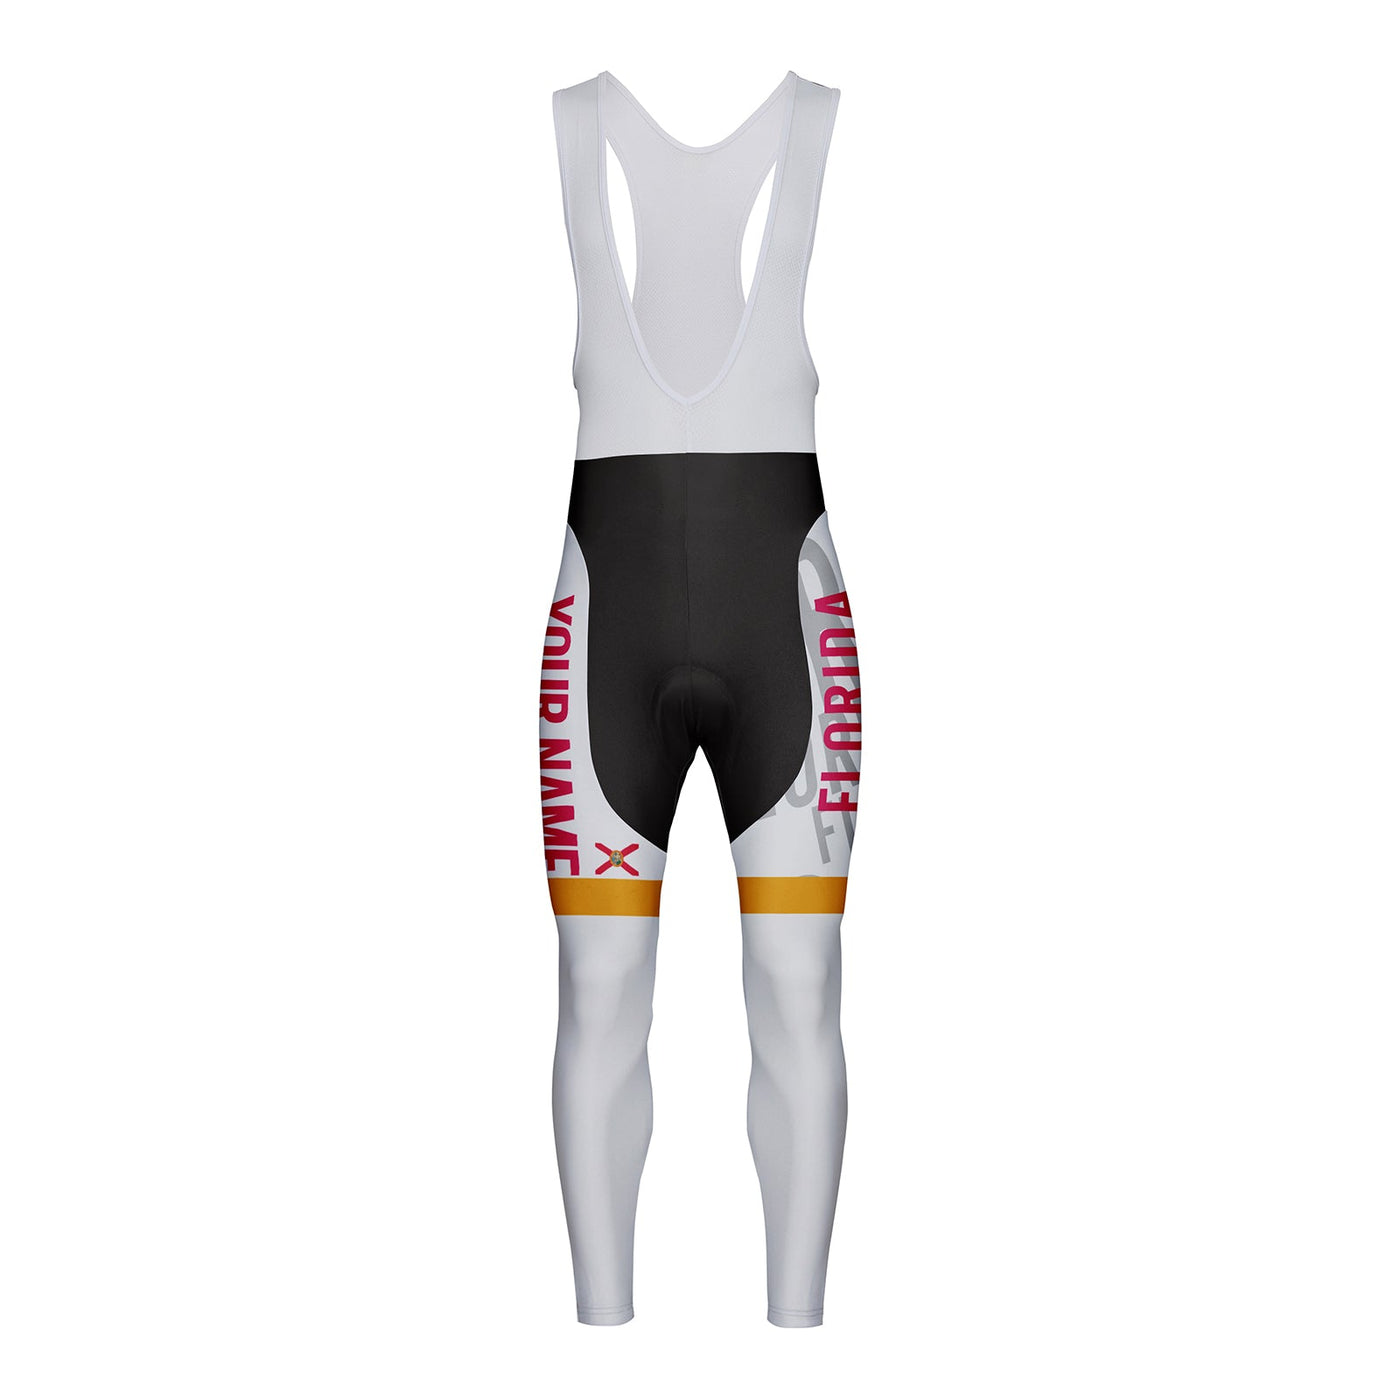 Customized Florida Unisex Thermal Fleece Cycling Bib Tights Long Pants